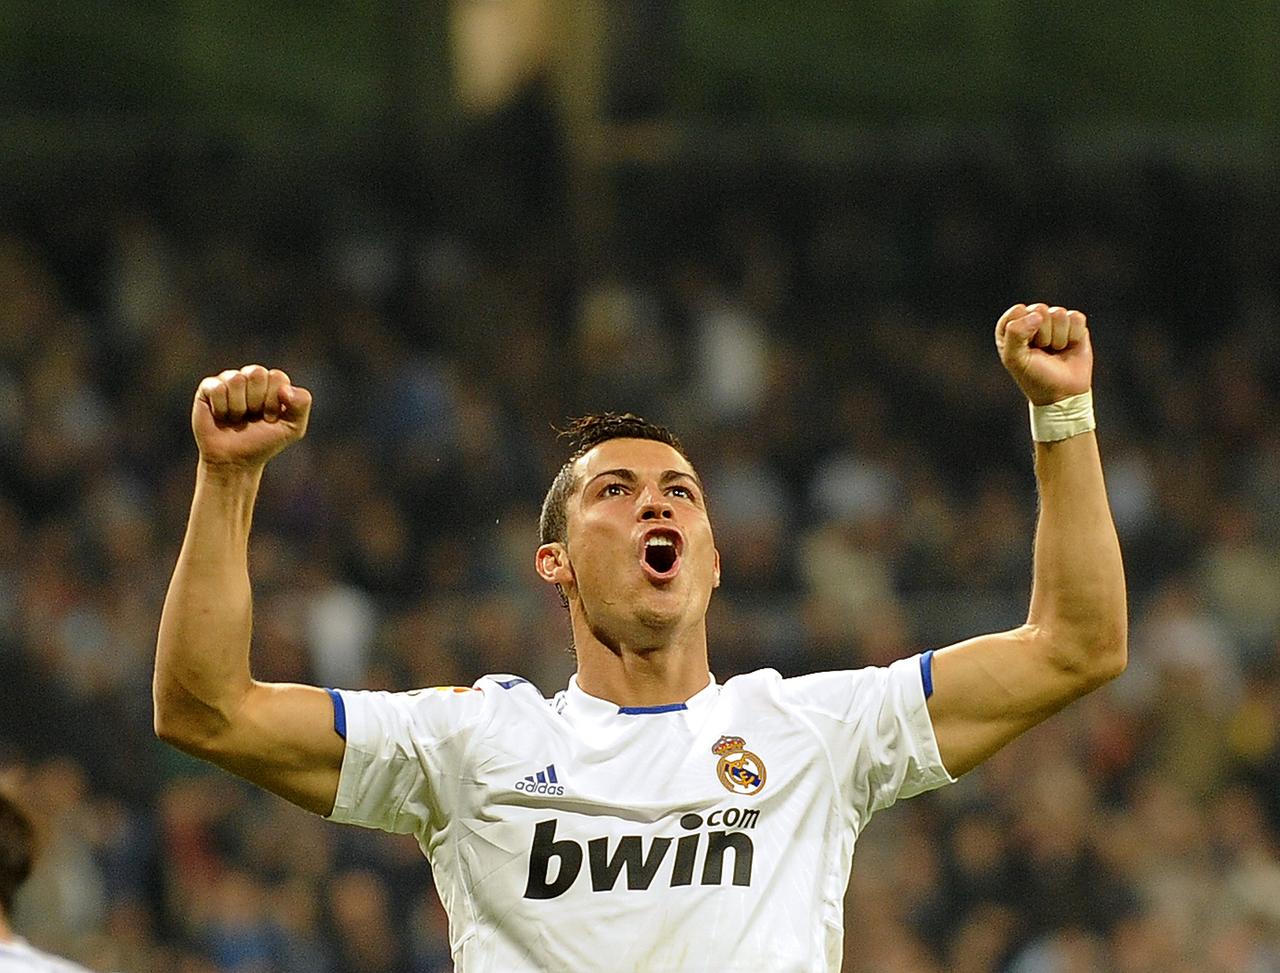 https://blogger.googleusercontent.com/img/b/R29vZ2xl/AVvXsEhh-ZrIzqpNGxTCzoiL5zXPoKi-vnPrq1QuBZFYPenqgHoh9BKiyKrErVRBs1rpyRbxNe7zpXvVDROhyWJ1DZ1ckakDhm2hE4SpoGs8ZYeE9cXkdh71Wmy4pJKv9fEHKIrtxn2ceQKC-X8n/s1600/Cristiano-Ronaldo-Real-Madrid-Celebration-Goal-Photos.jpg